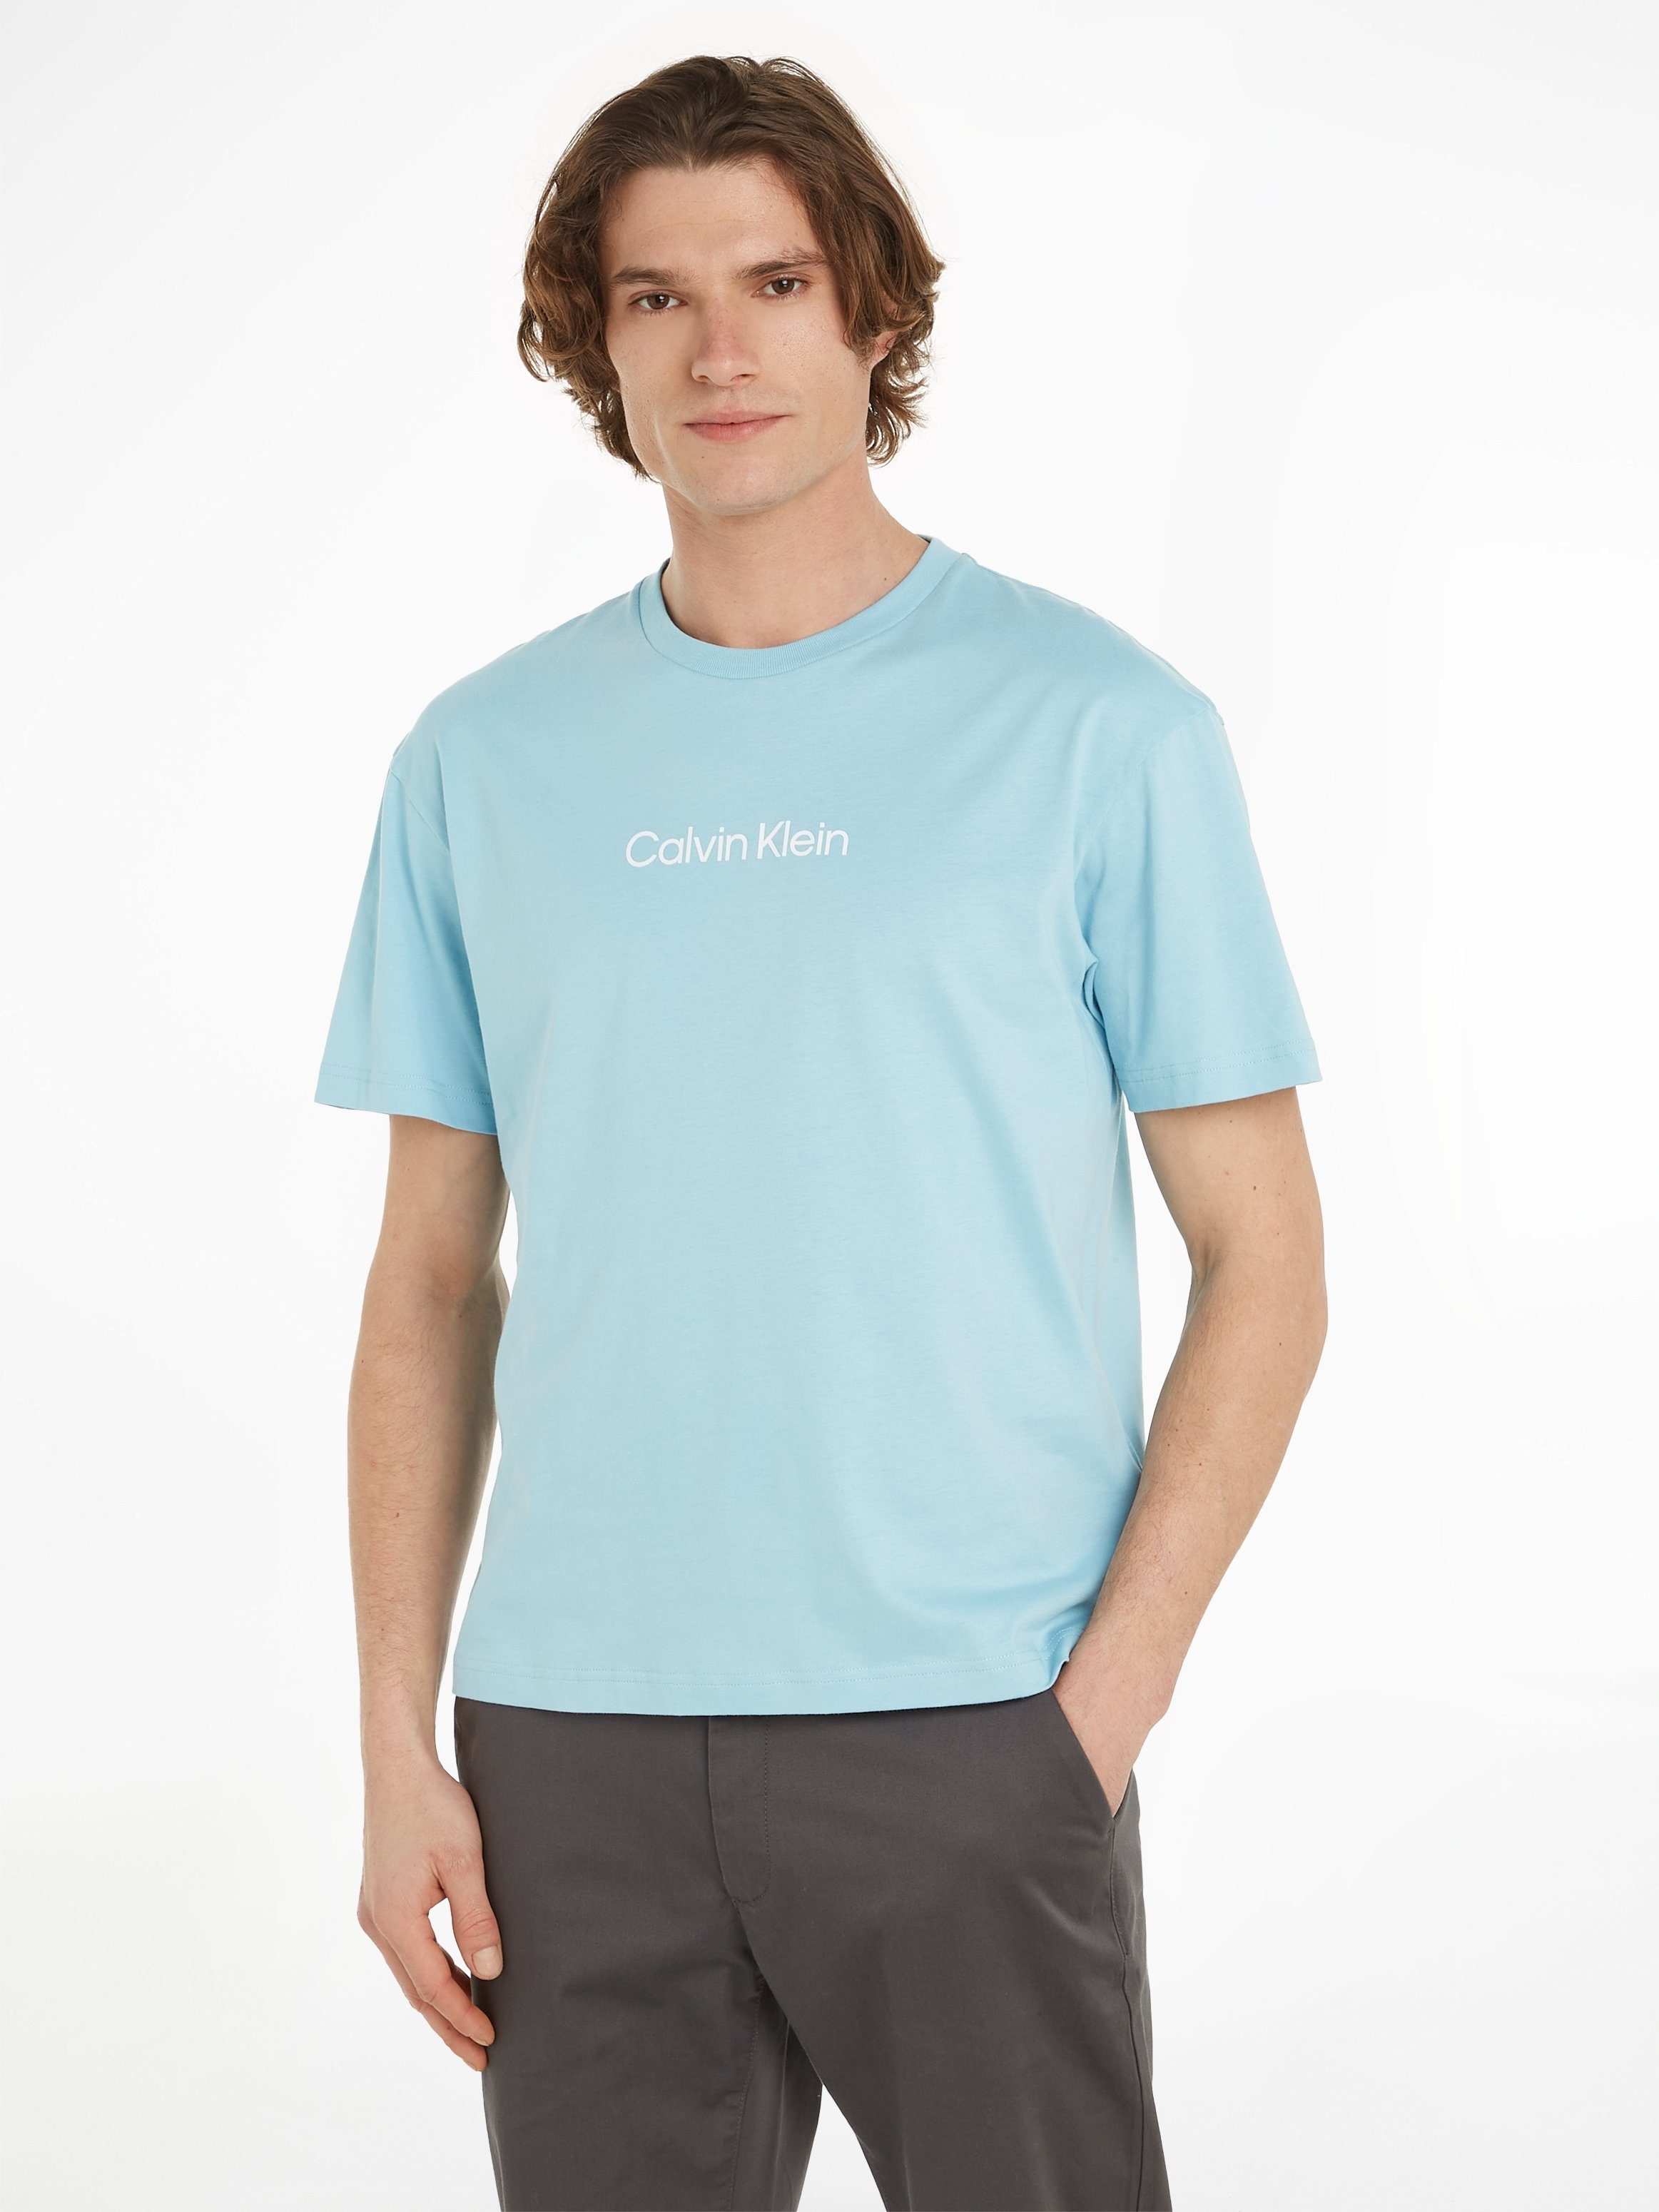 HERO aufgedrucktem COMFORT Calvin Blue LOGO mit Tropic T-Shirt T-SHIRT Markenlabel Klein